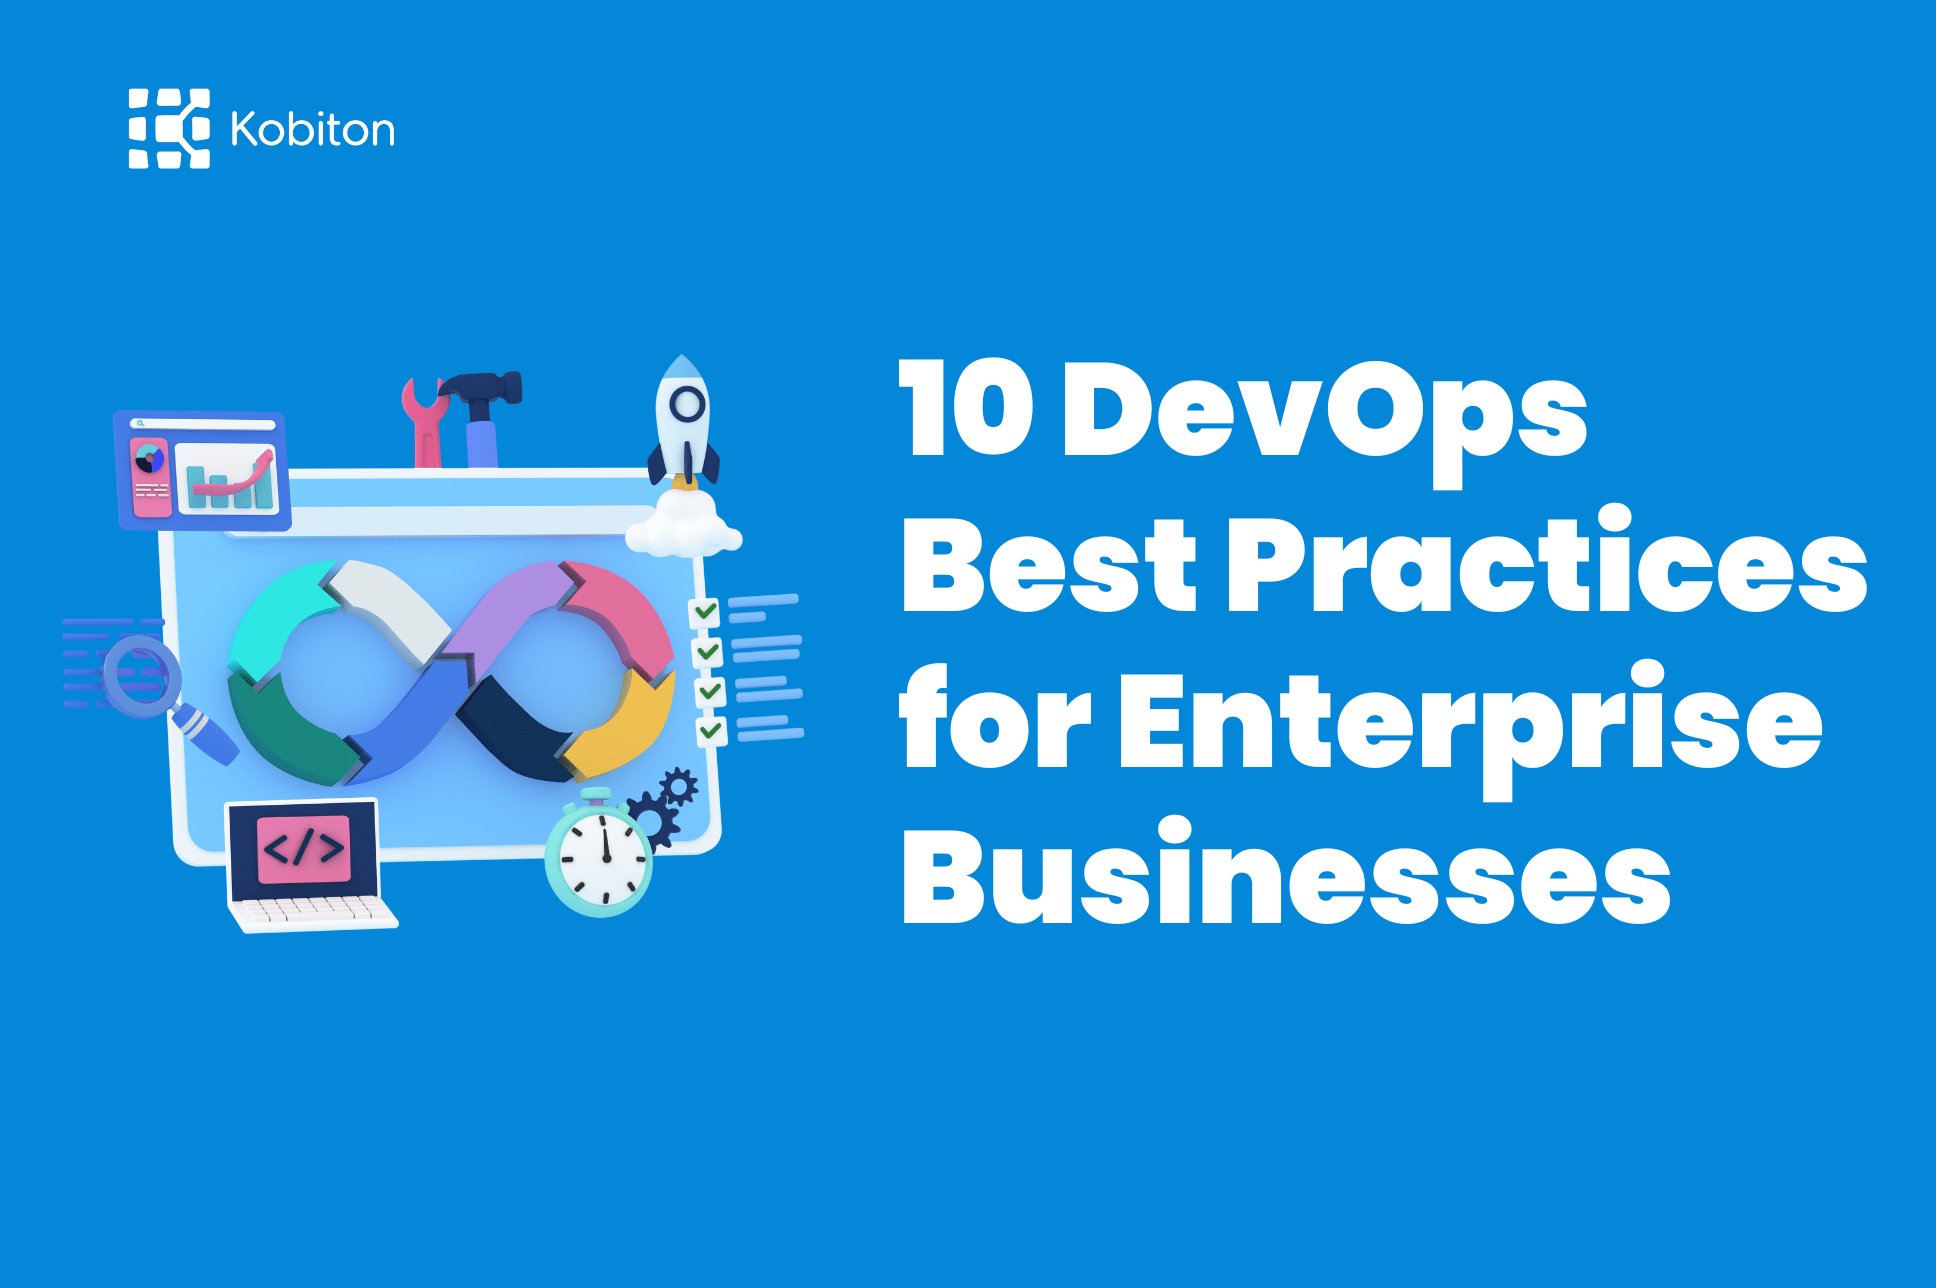 10 DevOps Best Practices for Enterprise Businesses